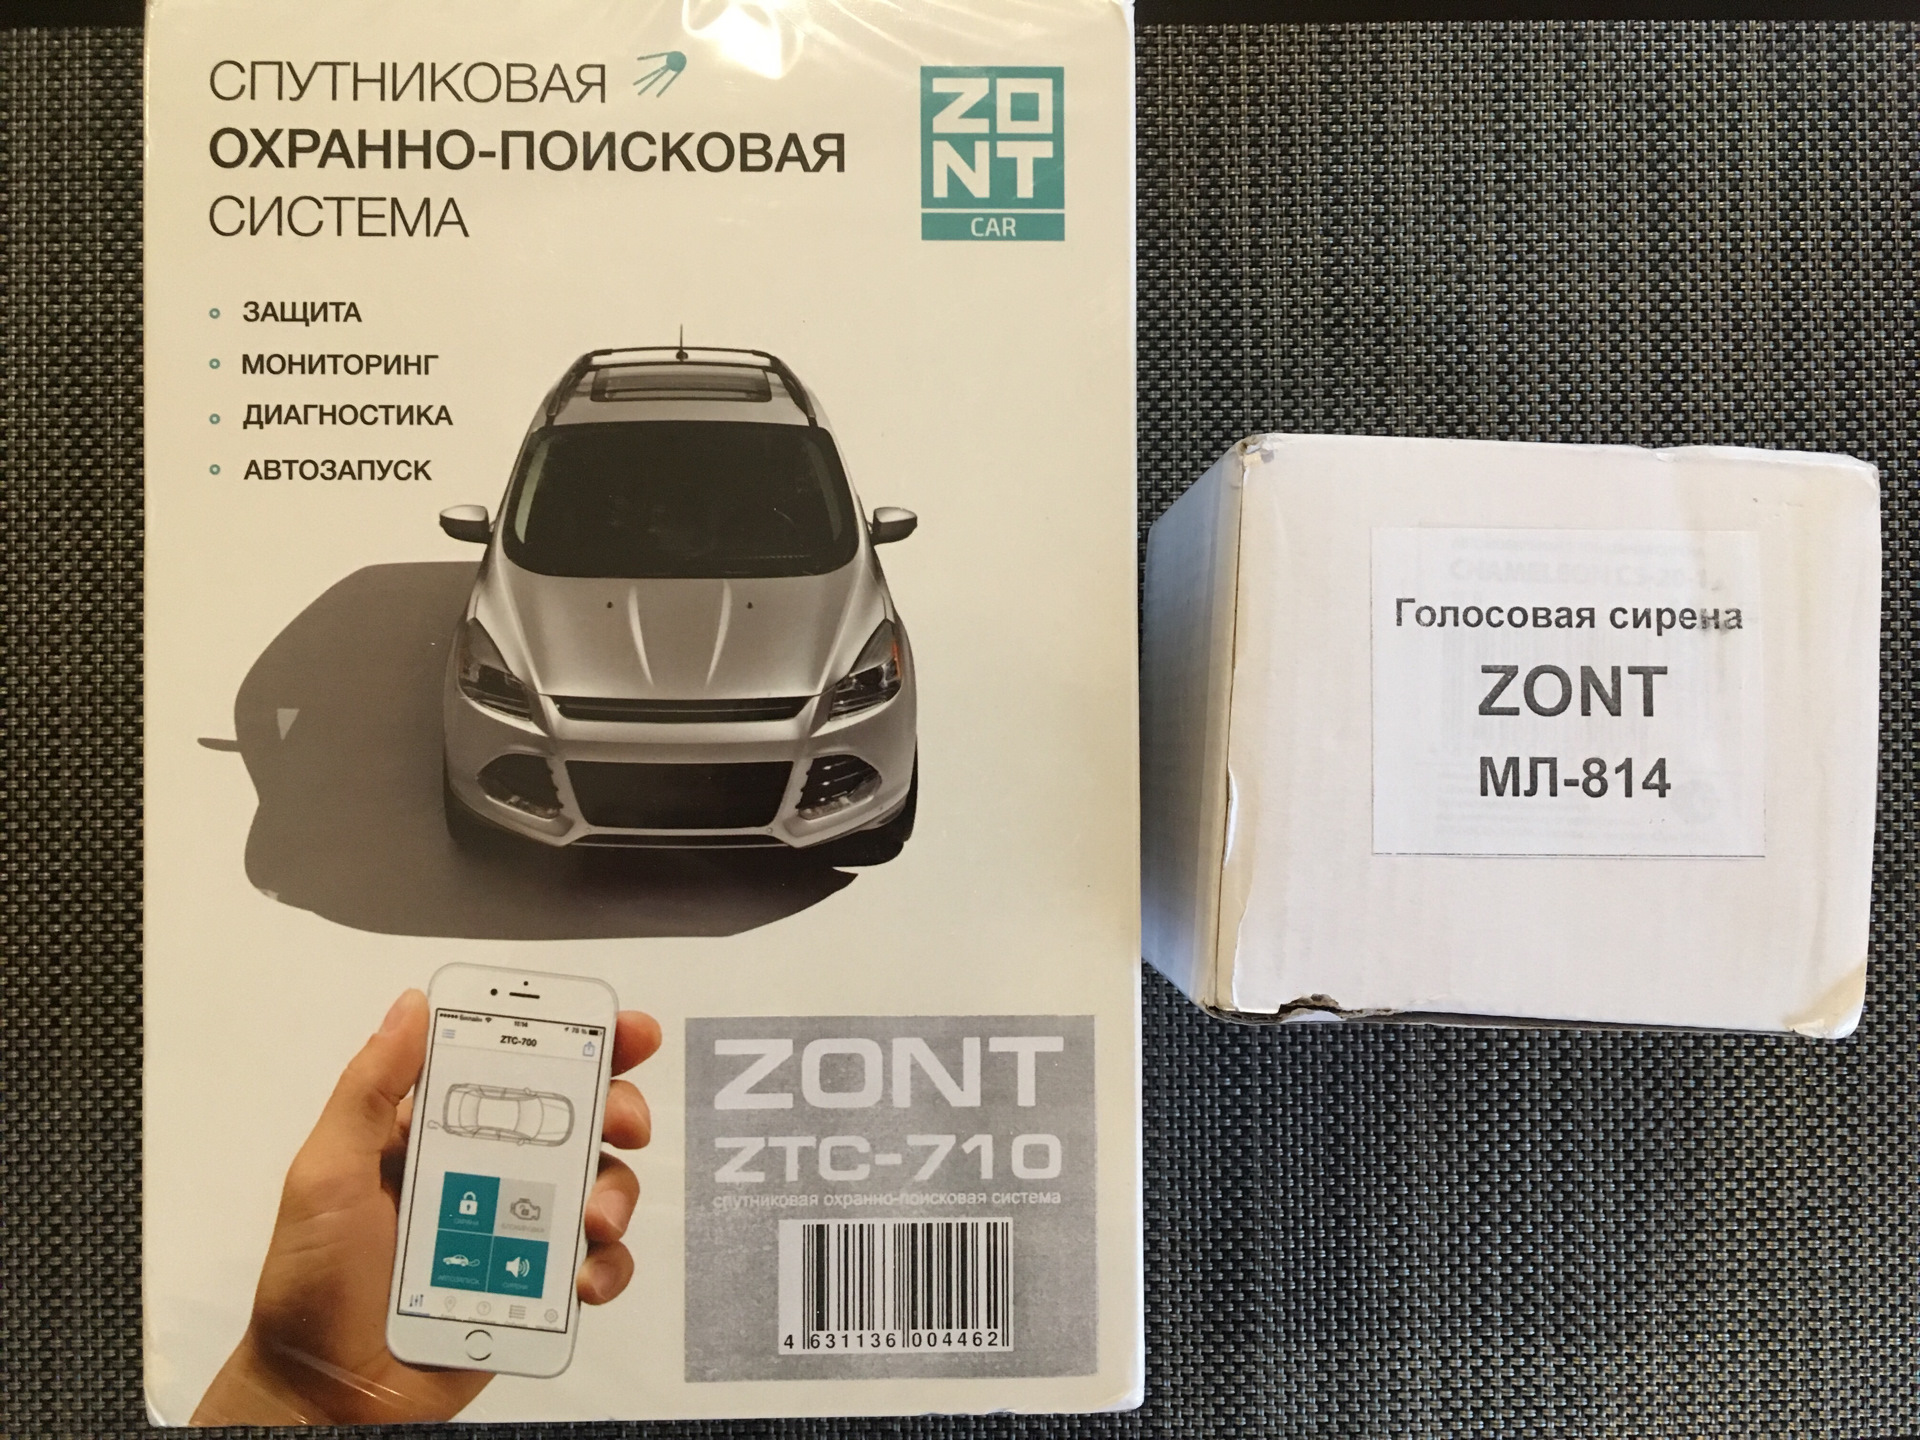 Zont карта. Zont ZTC-710 slave. Автосигнализация ZTC-7xx. Карта владельца автомобильной сигнализации Zont ZTC.